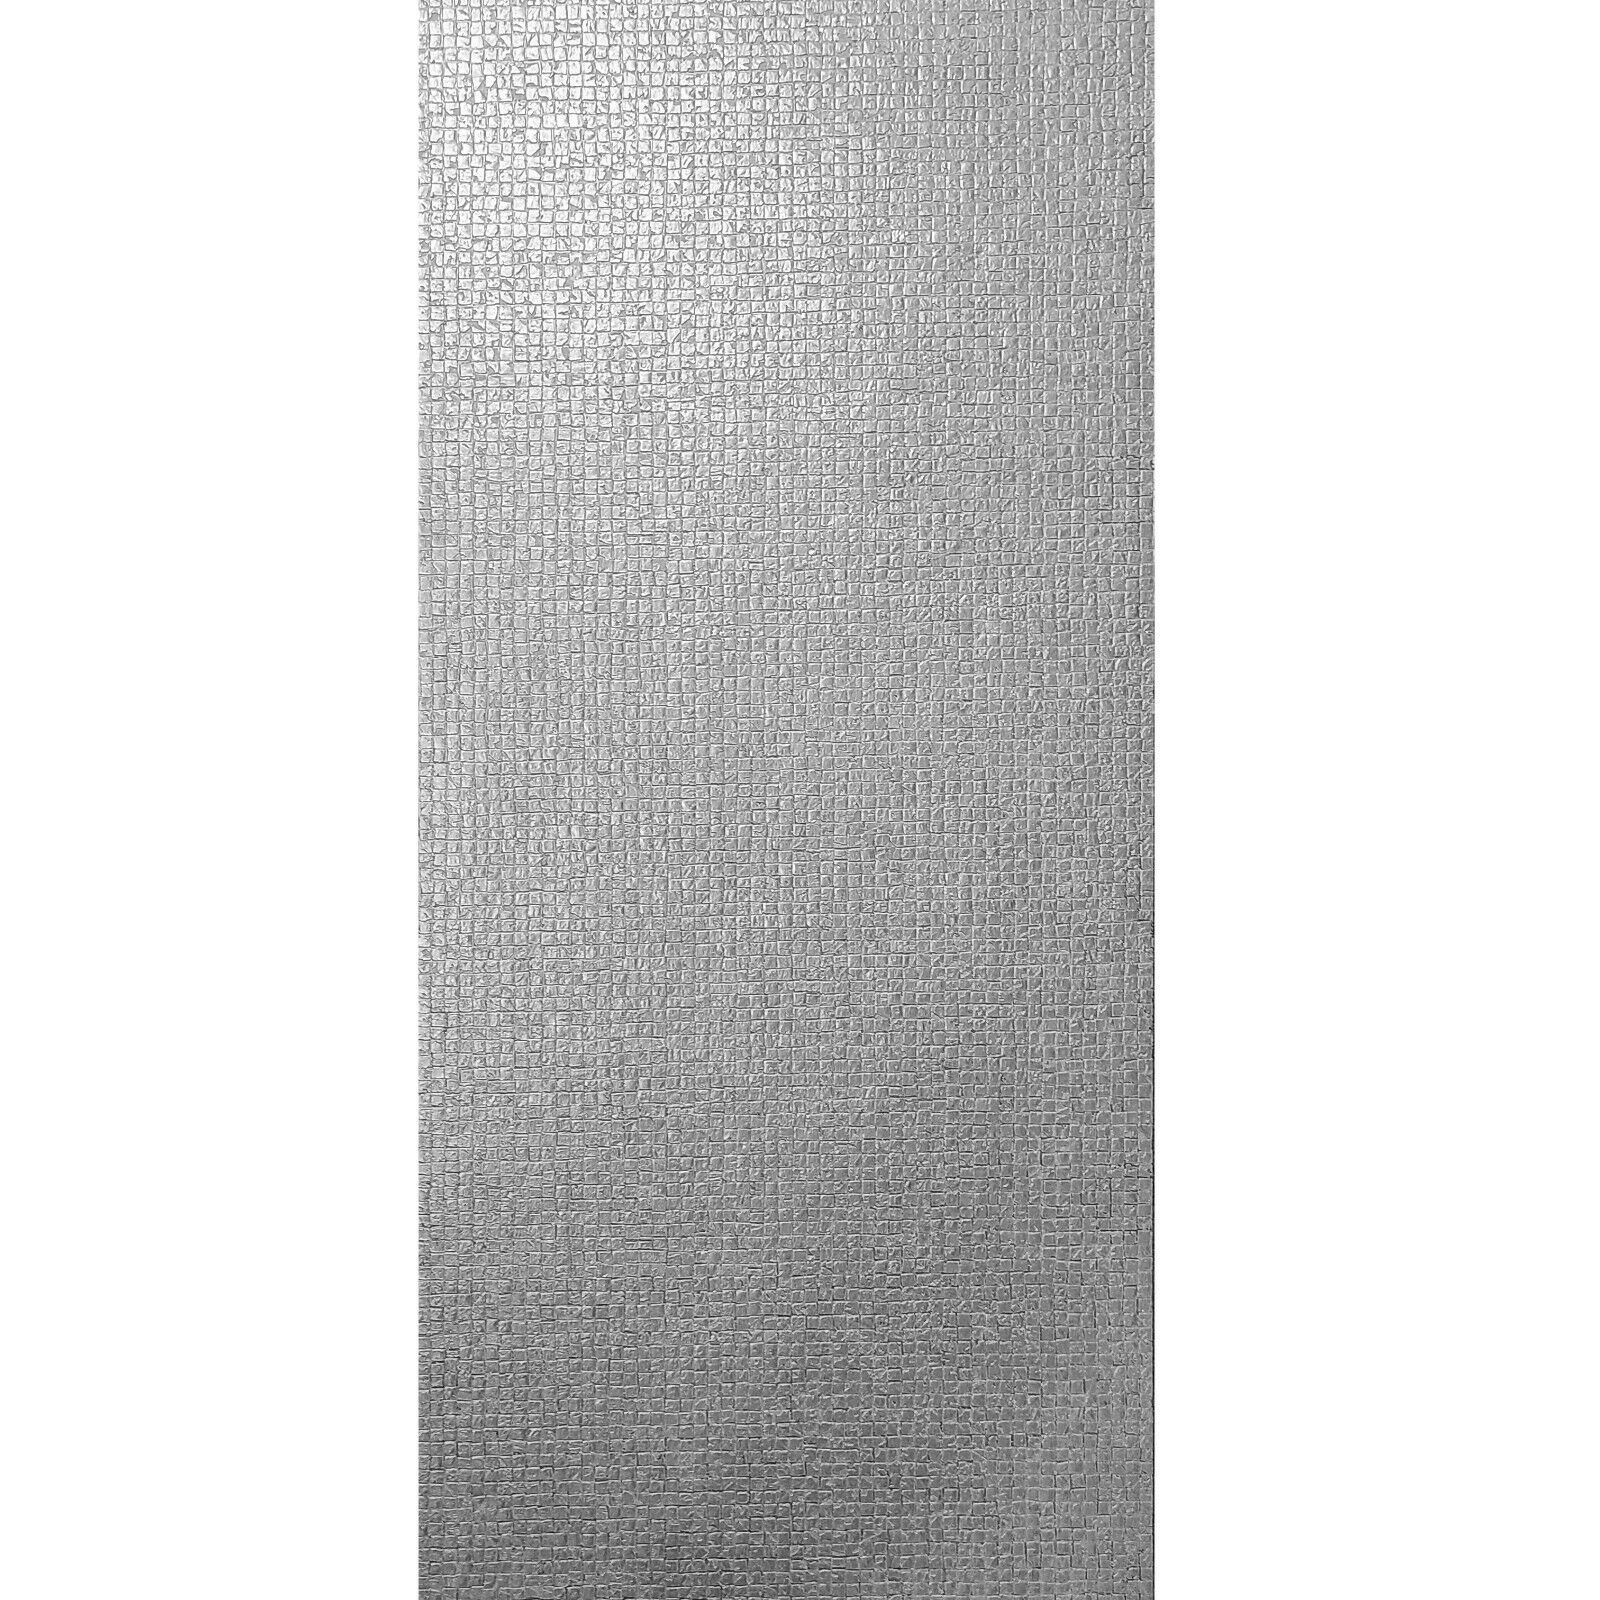 Z2906 Zambaiti Industrial gold gray silver metallic tiles textured